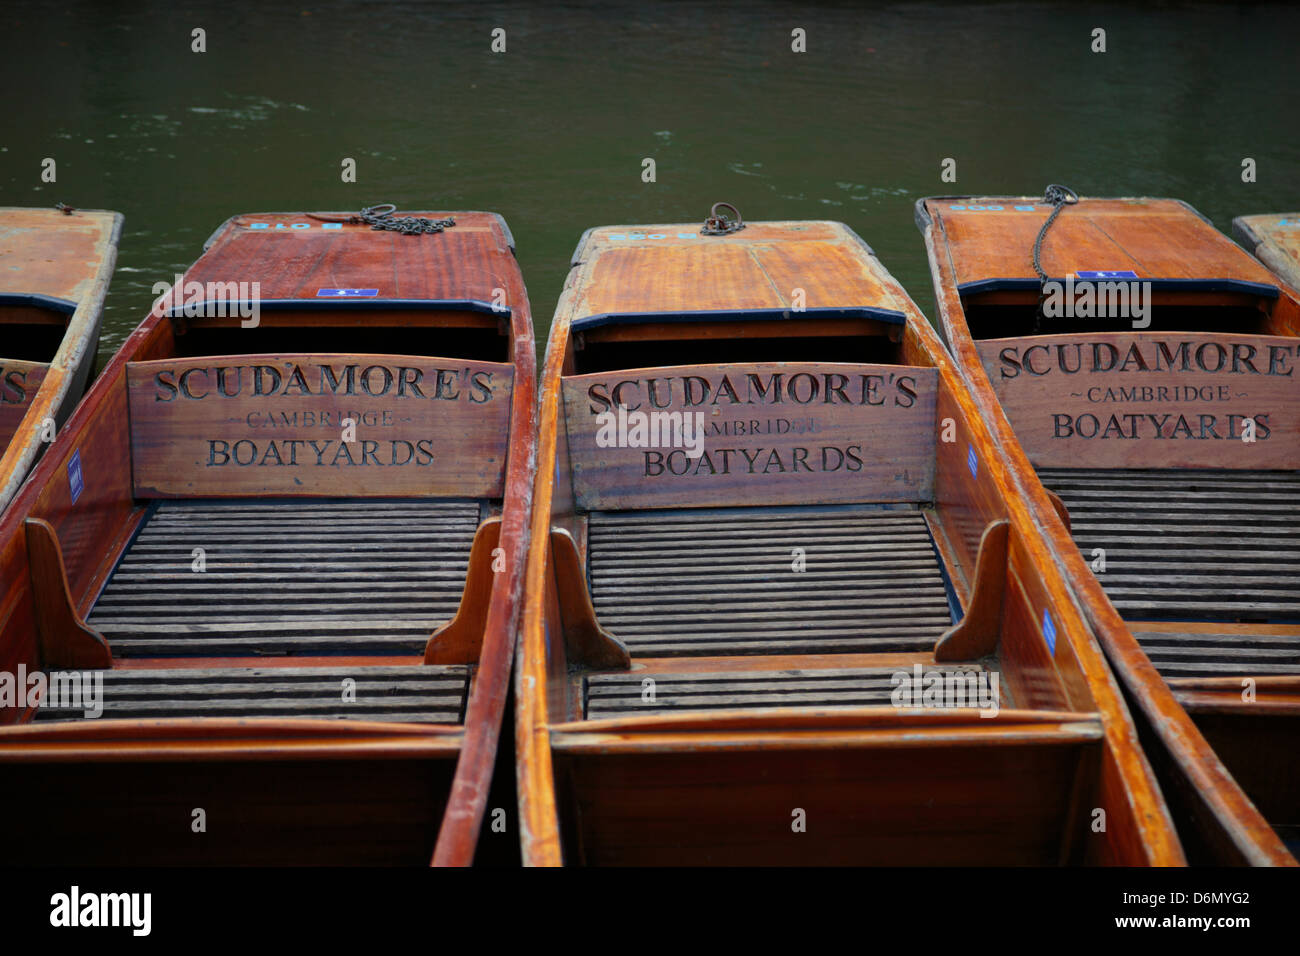 Scudamore's Cambridge Boatyards, boats for hire, River Cam, Cambridge, England Stock Photo